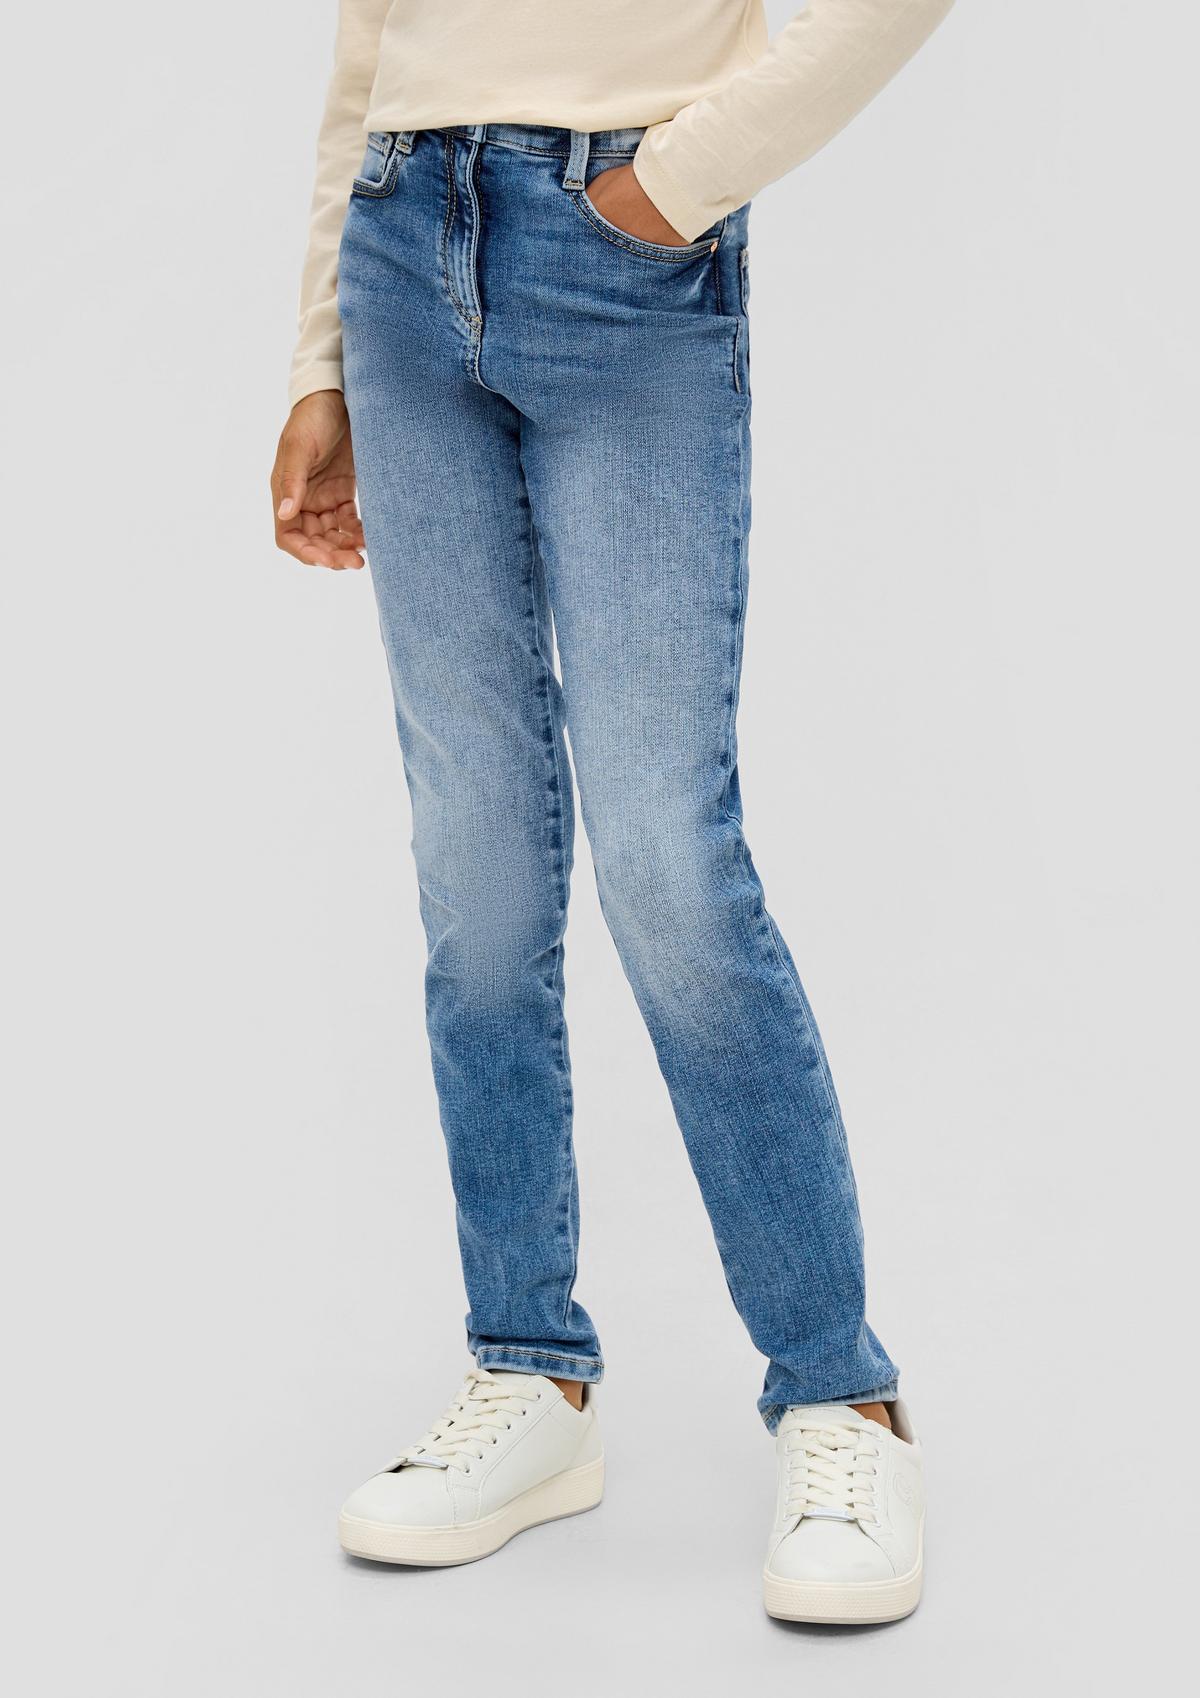 Ankle-Jeans Suri / Regular Fit / High Rise / Slim Leg